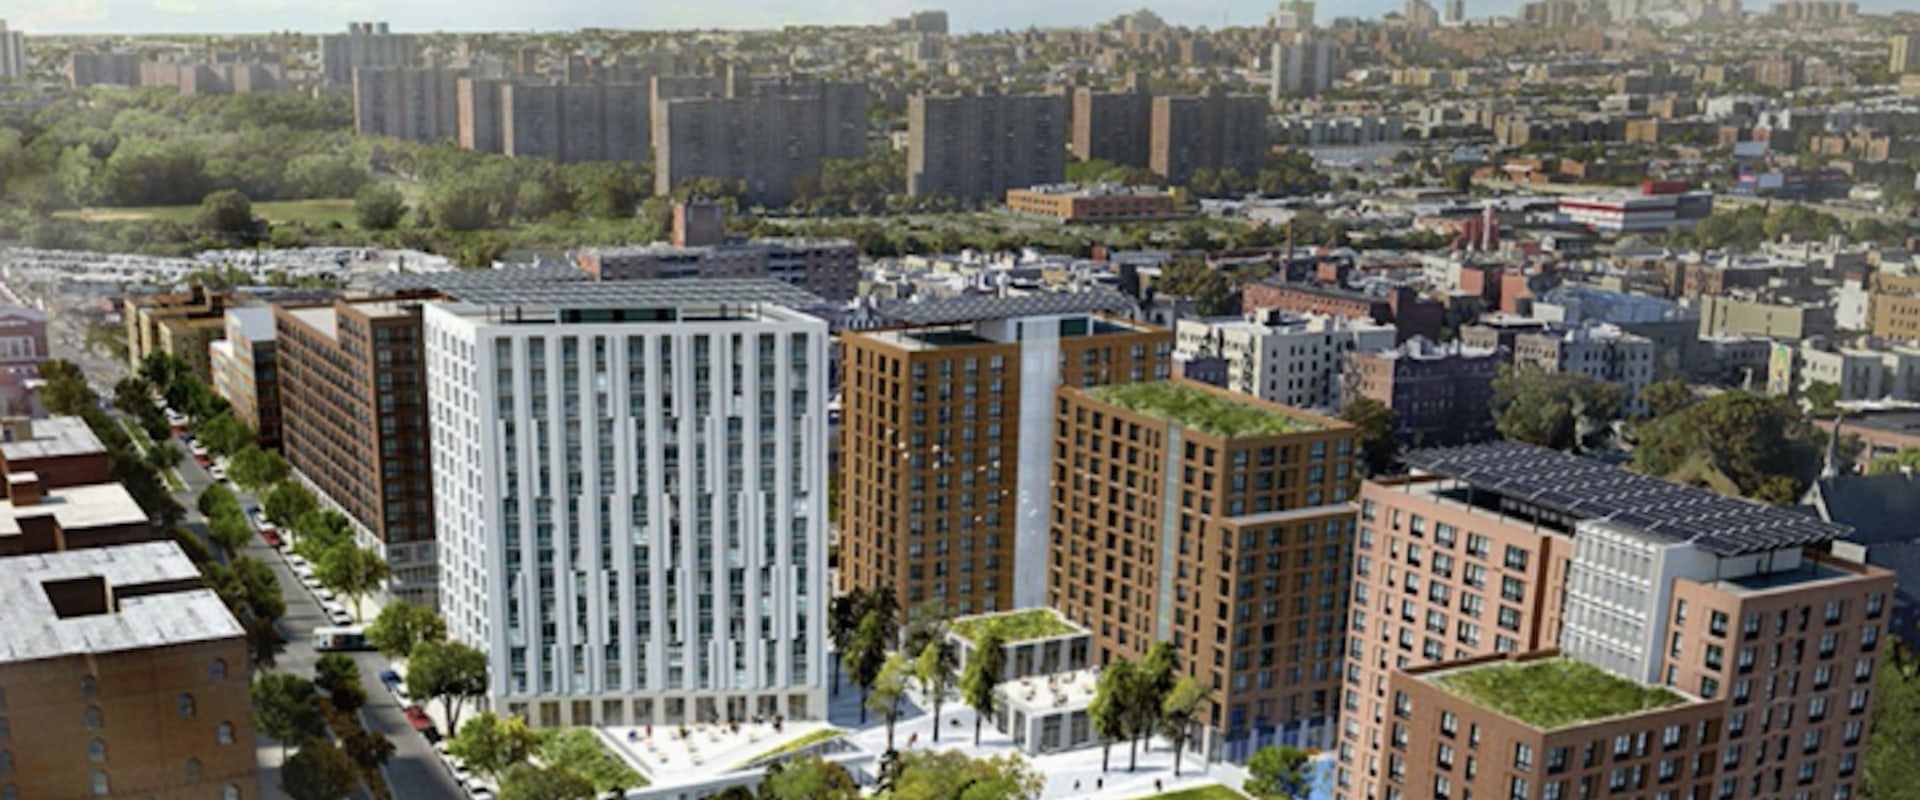 Aligning Development Plans for the Bronx, New York